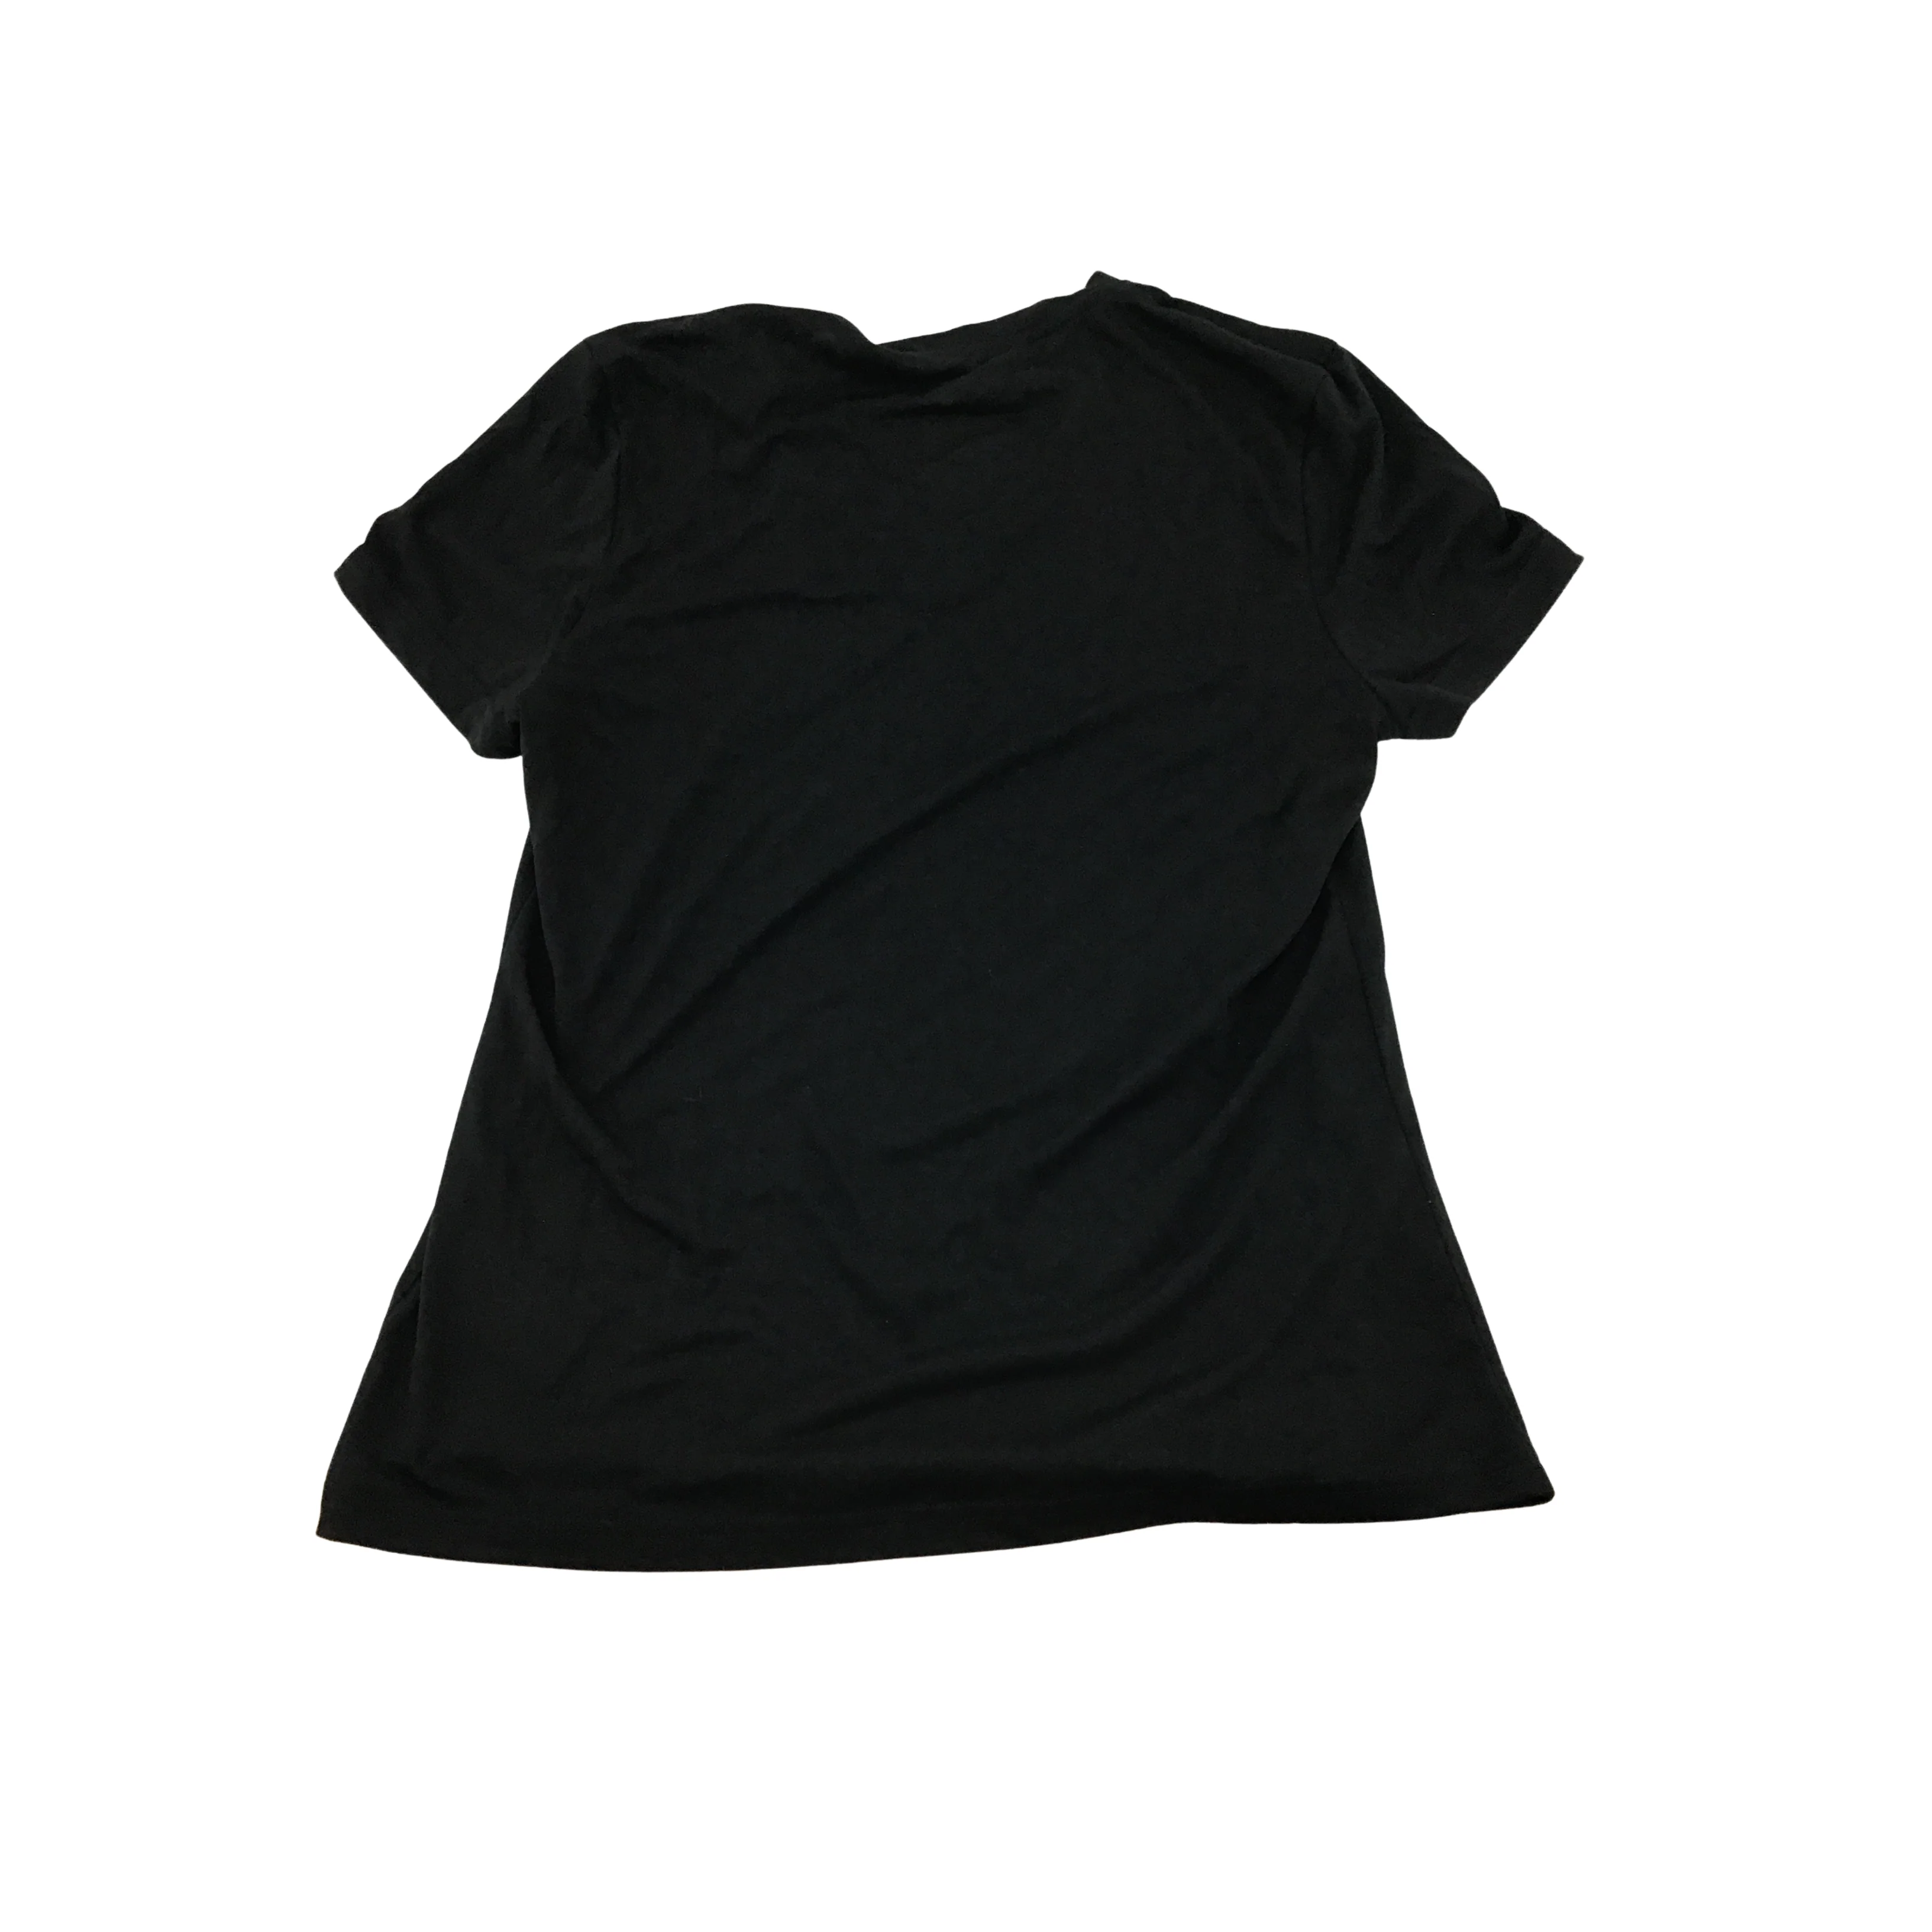 Reebok: Women's T-shirt / Black / V-Neck / Short Sleeve / Small